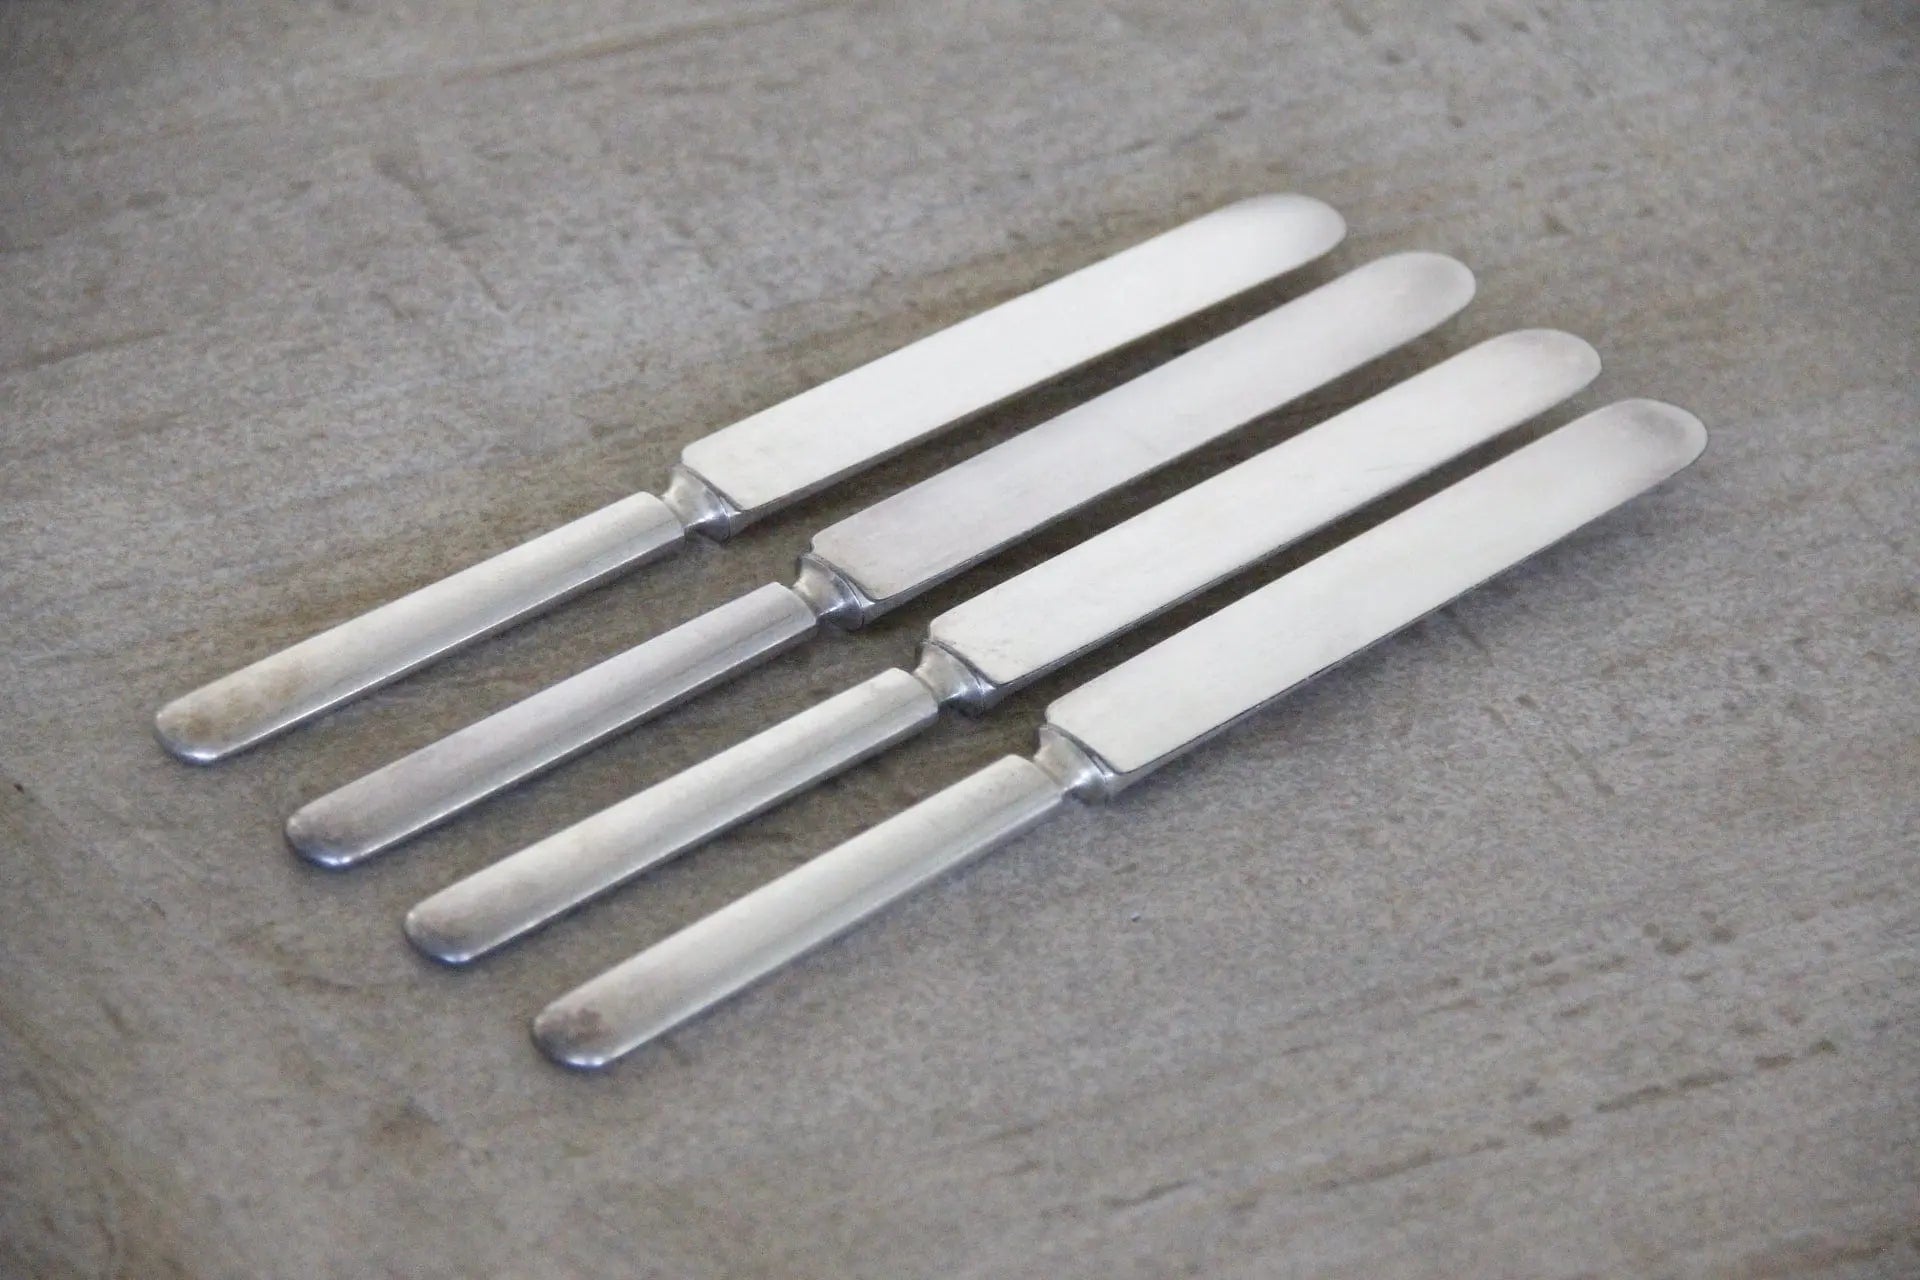 Antique Silver Plate Blunt Table Knife | Flatware 4 Pcs.  Debra Hall Lifestyle